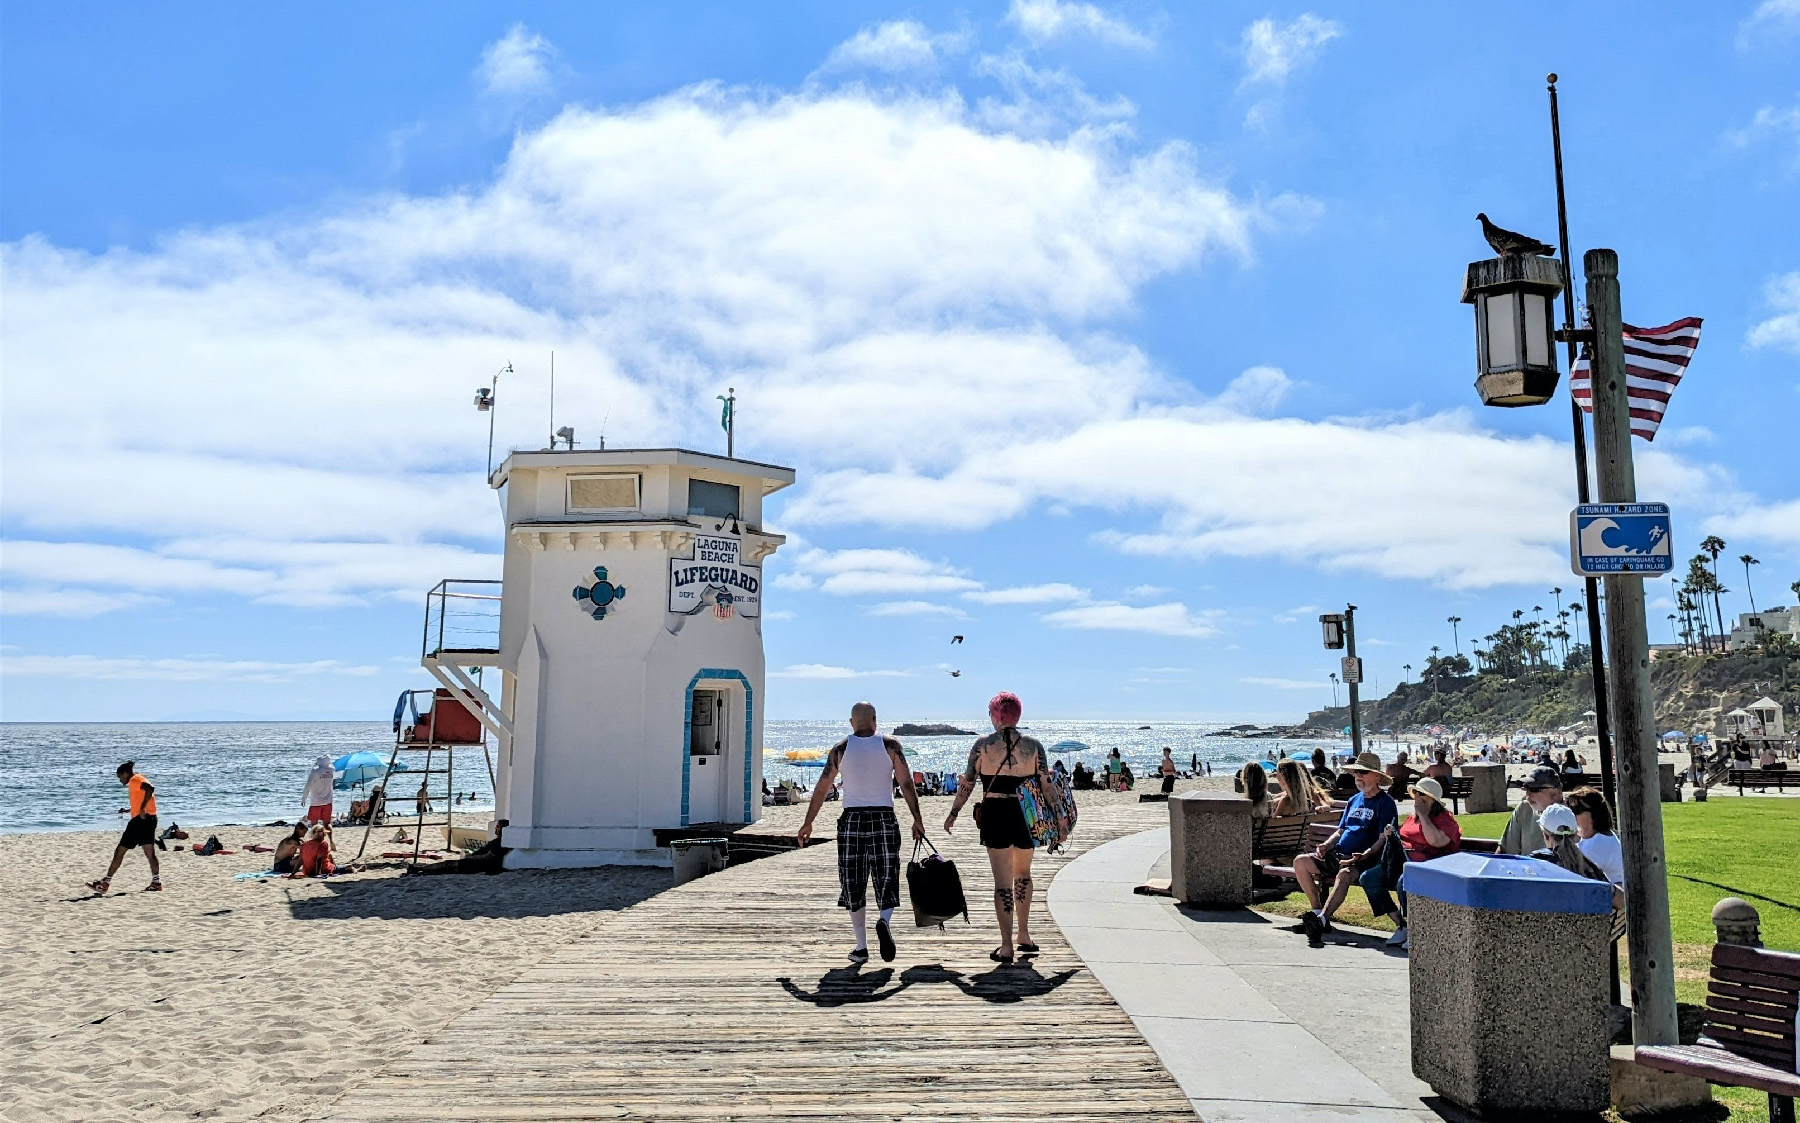 A popular spot in Laguna Beach, California, is the boardwalk and historic lifeguard stand at Main Beach.